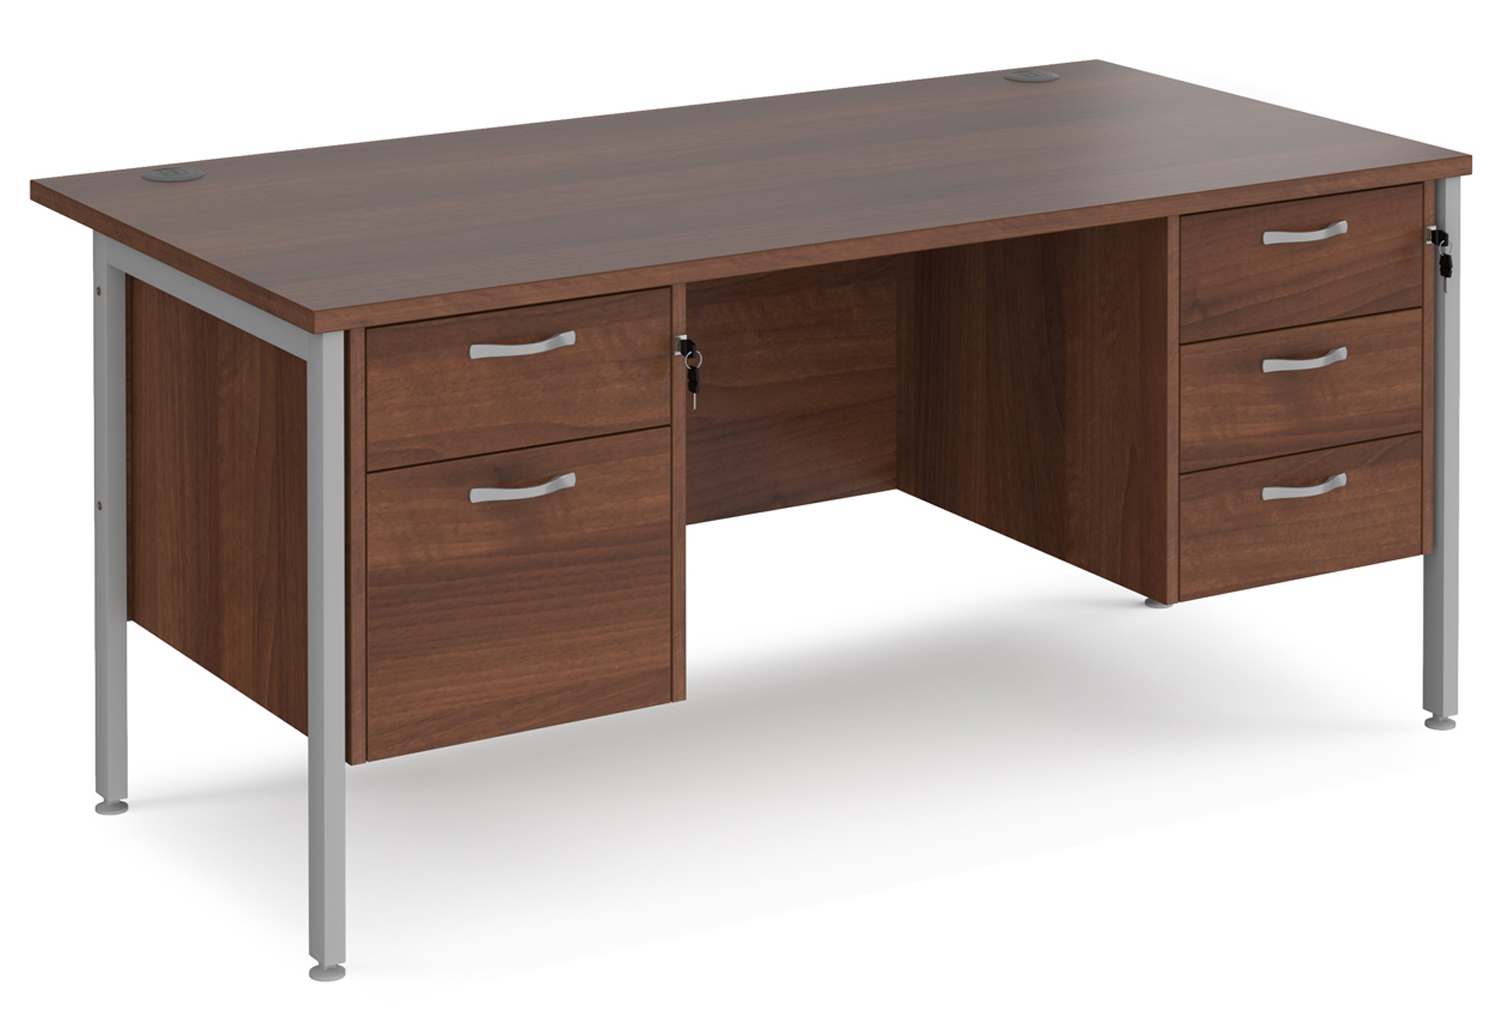 Value Line Deluxe H-Leg Rectangular Office Desk 2+3 Drawers (Silver Legs), 160wx80dx73h (cm), Walnut